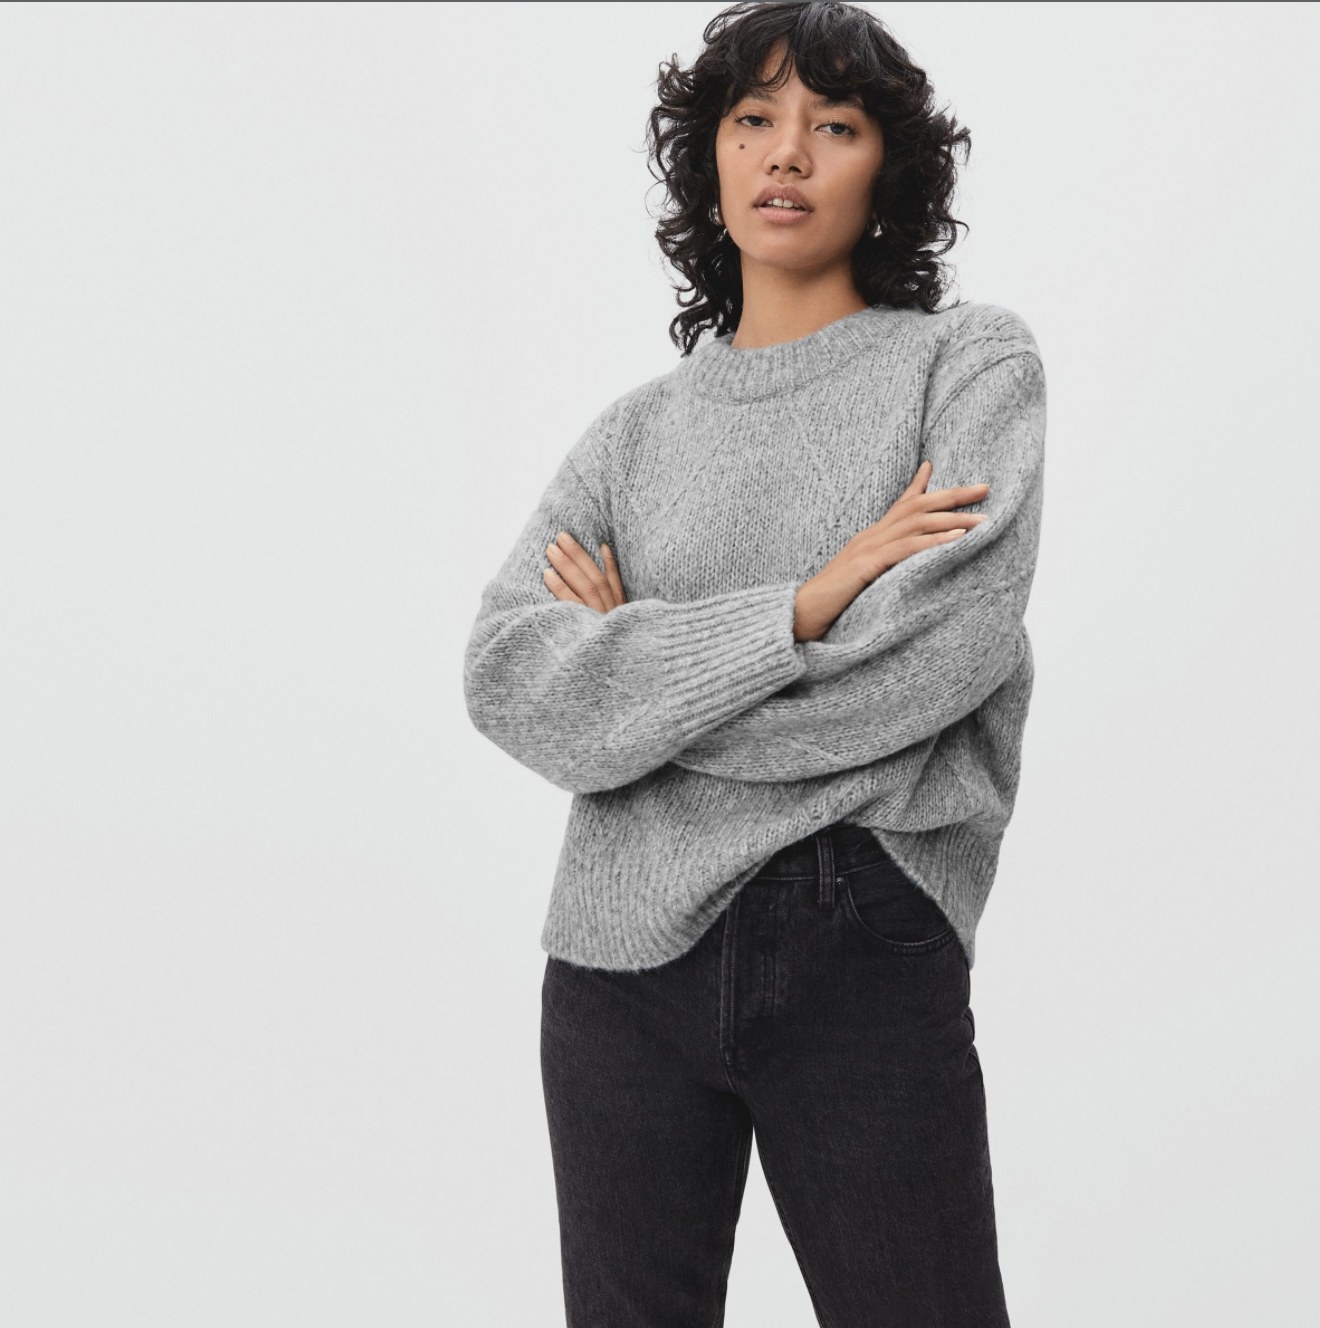 Model wearing the grey sweater